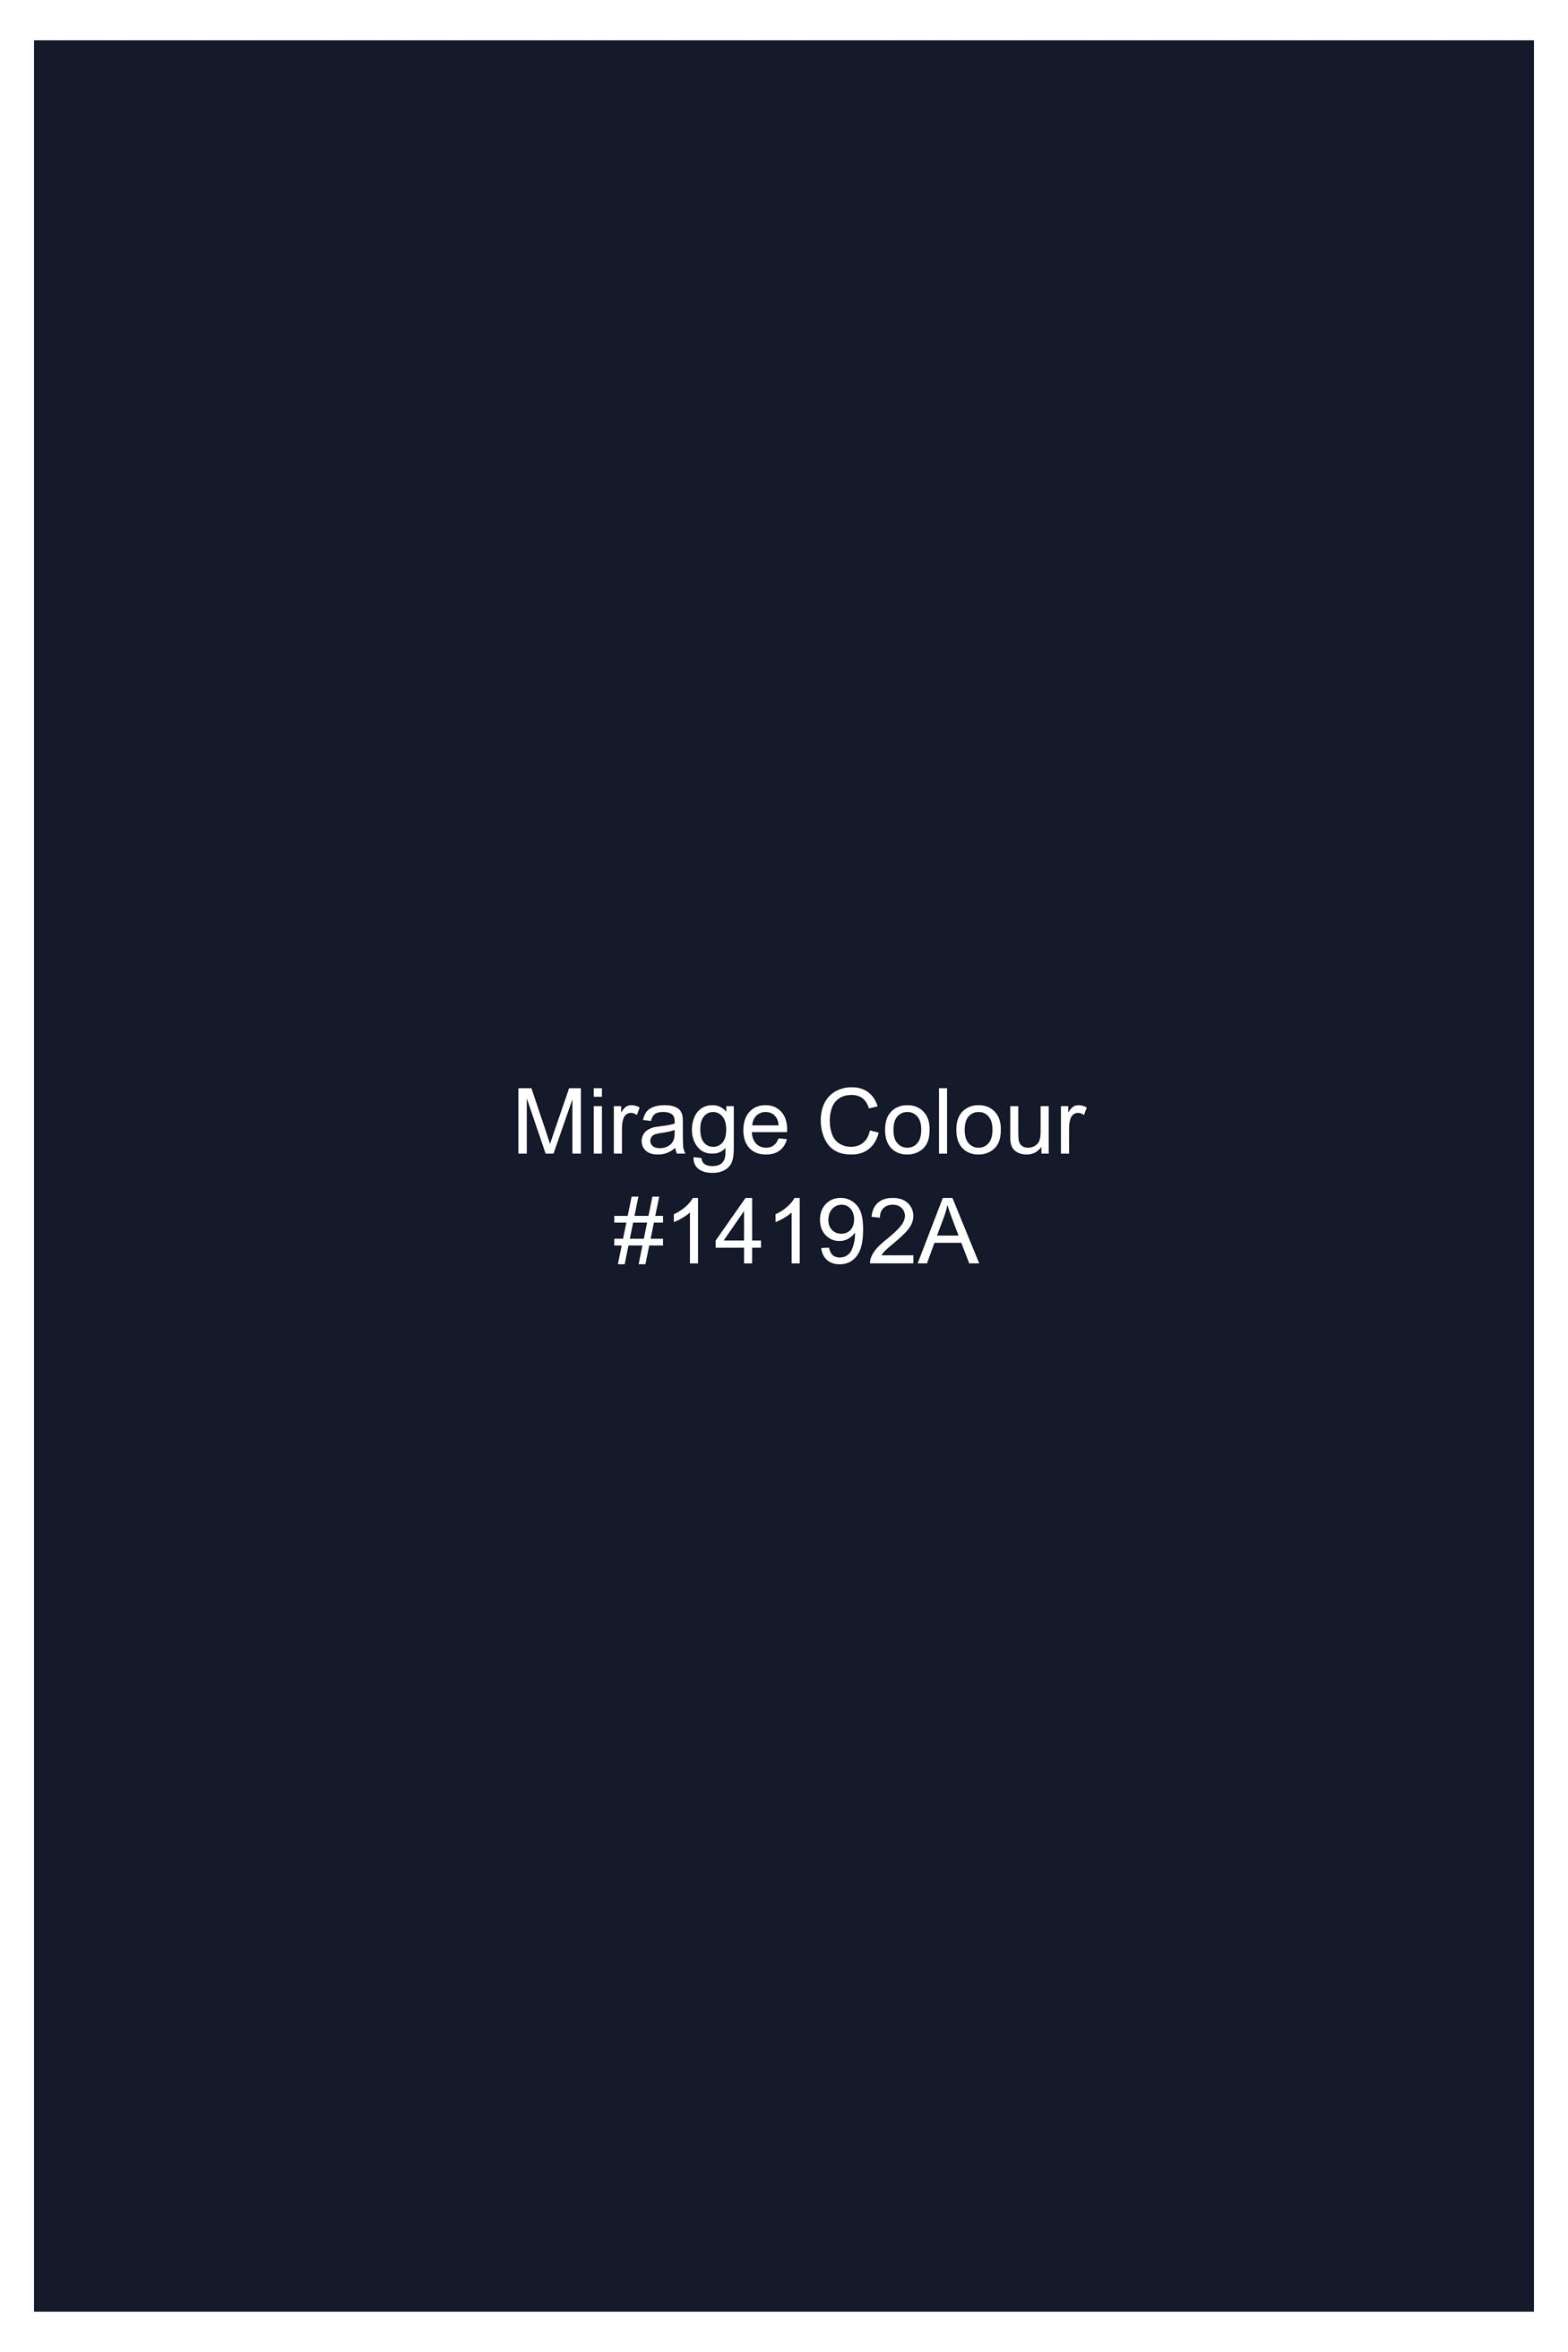 Mirage Blue Premium Cotton Shirt 11711-CA-38, 11711-CA-H-38, 11711-CA-39, 11711-CA-H-39, 11711-CA-40, 11711-CA-H-40, 11711-CA-42, 11711-CA-H-42, 11711-CA-44, 11711-CA-H-44, 11711-CA-46, 11711-CA-H-46, 11711-CA-48, 11711-CA-H-48, 11711-CA-50, 11711-CA-H-50, 11711-CA-52, 11711-CA-H-52